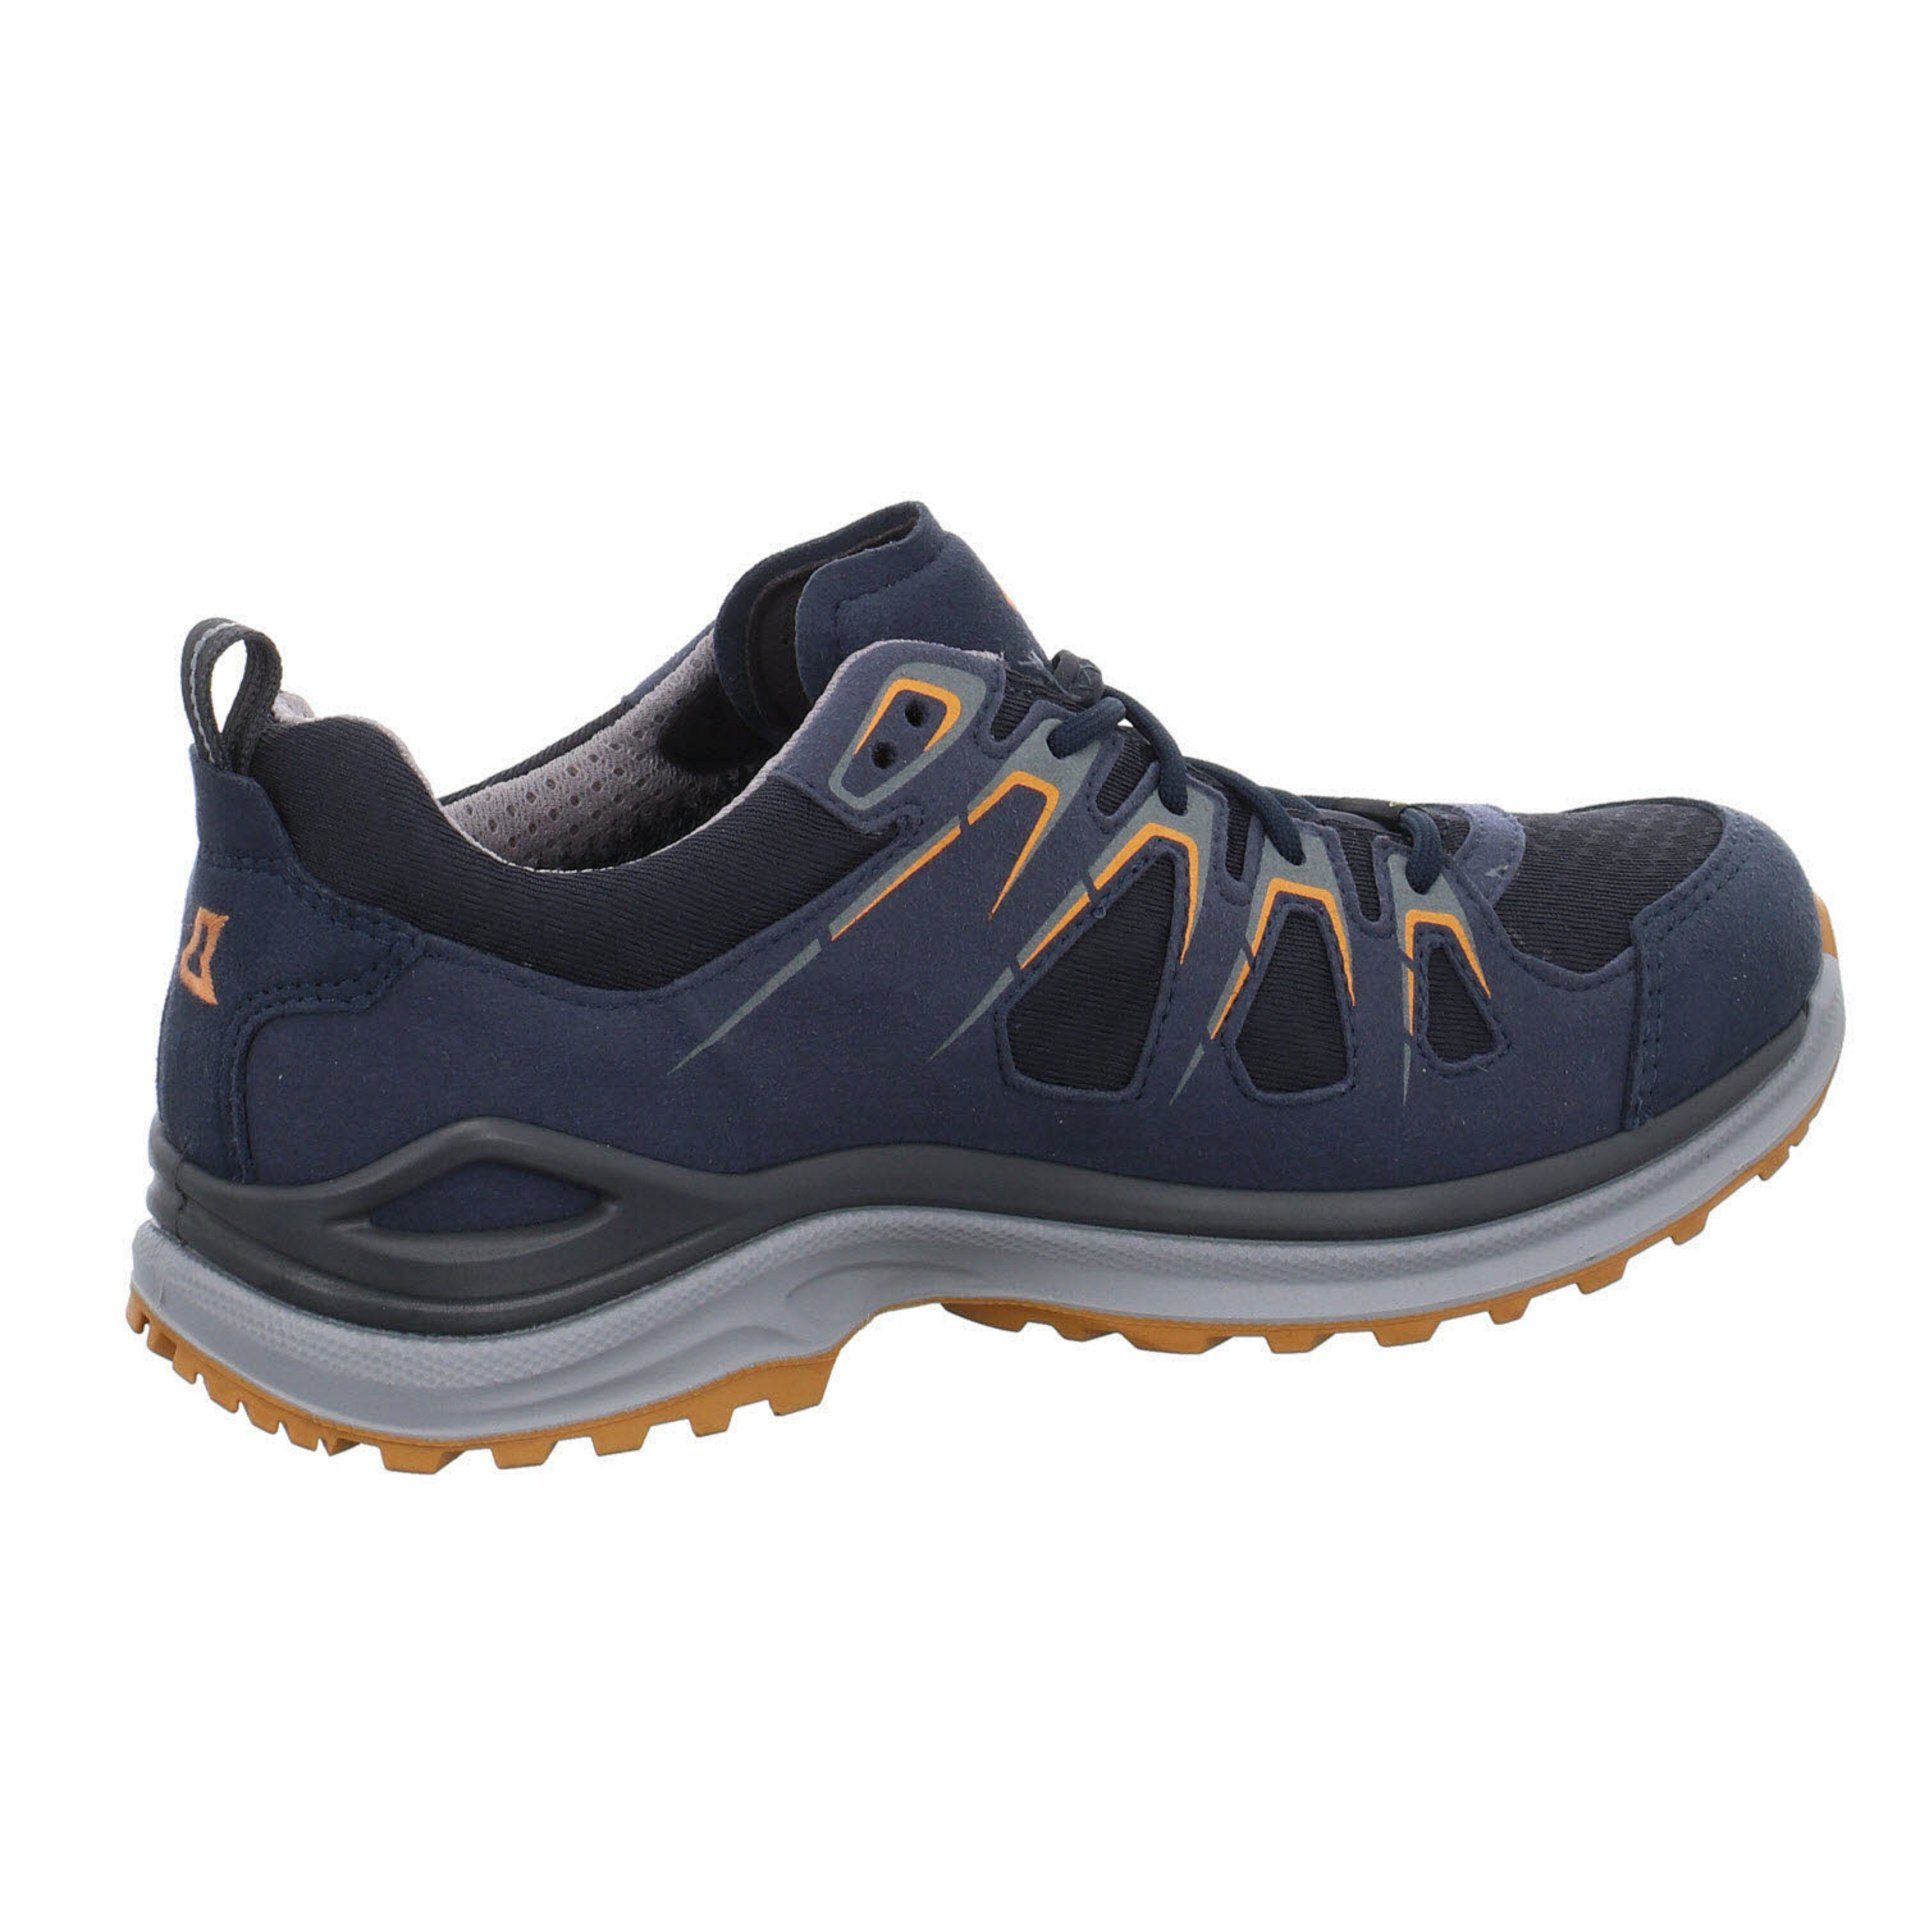 Damen Outdoor Outdoorschuh Lowa Synthetikkombination EVO Innox Outdoorschuh Schuhe Lo stahlblau/marine